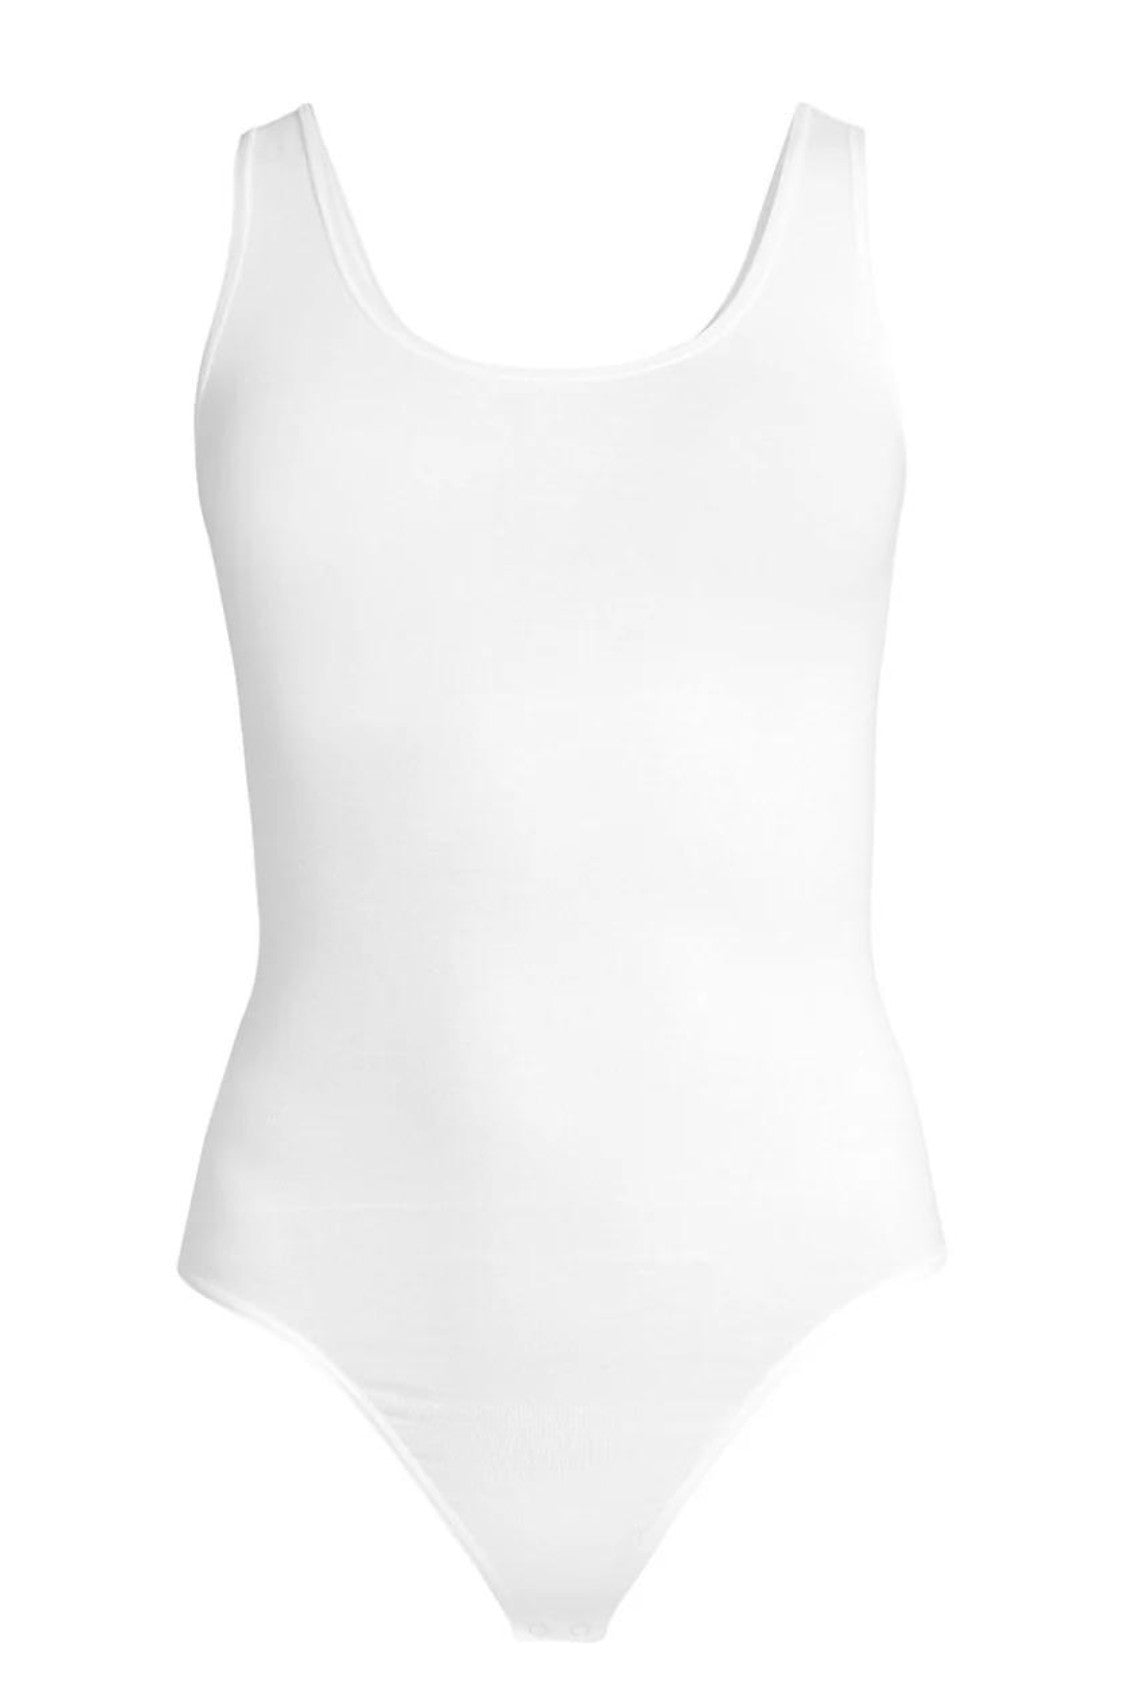 Ruby Shaping Thong Bodysuit - Cotton Seamless - White Yummie